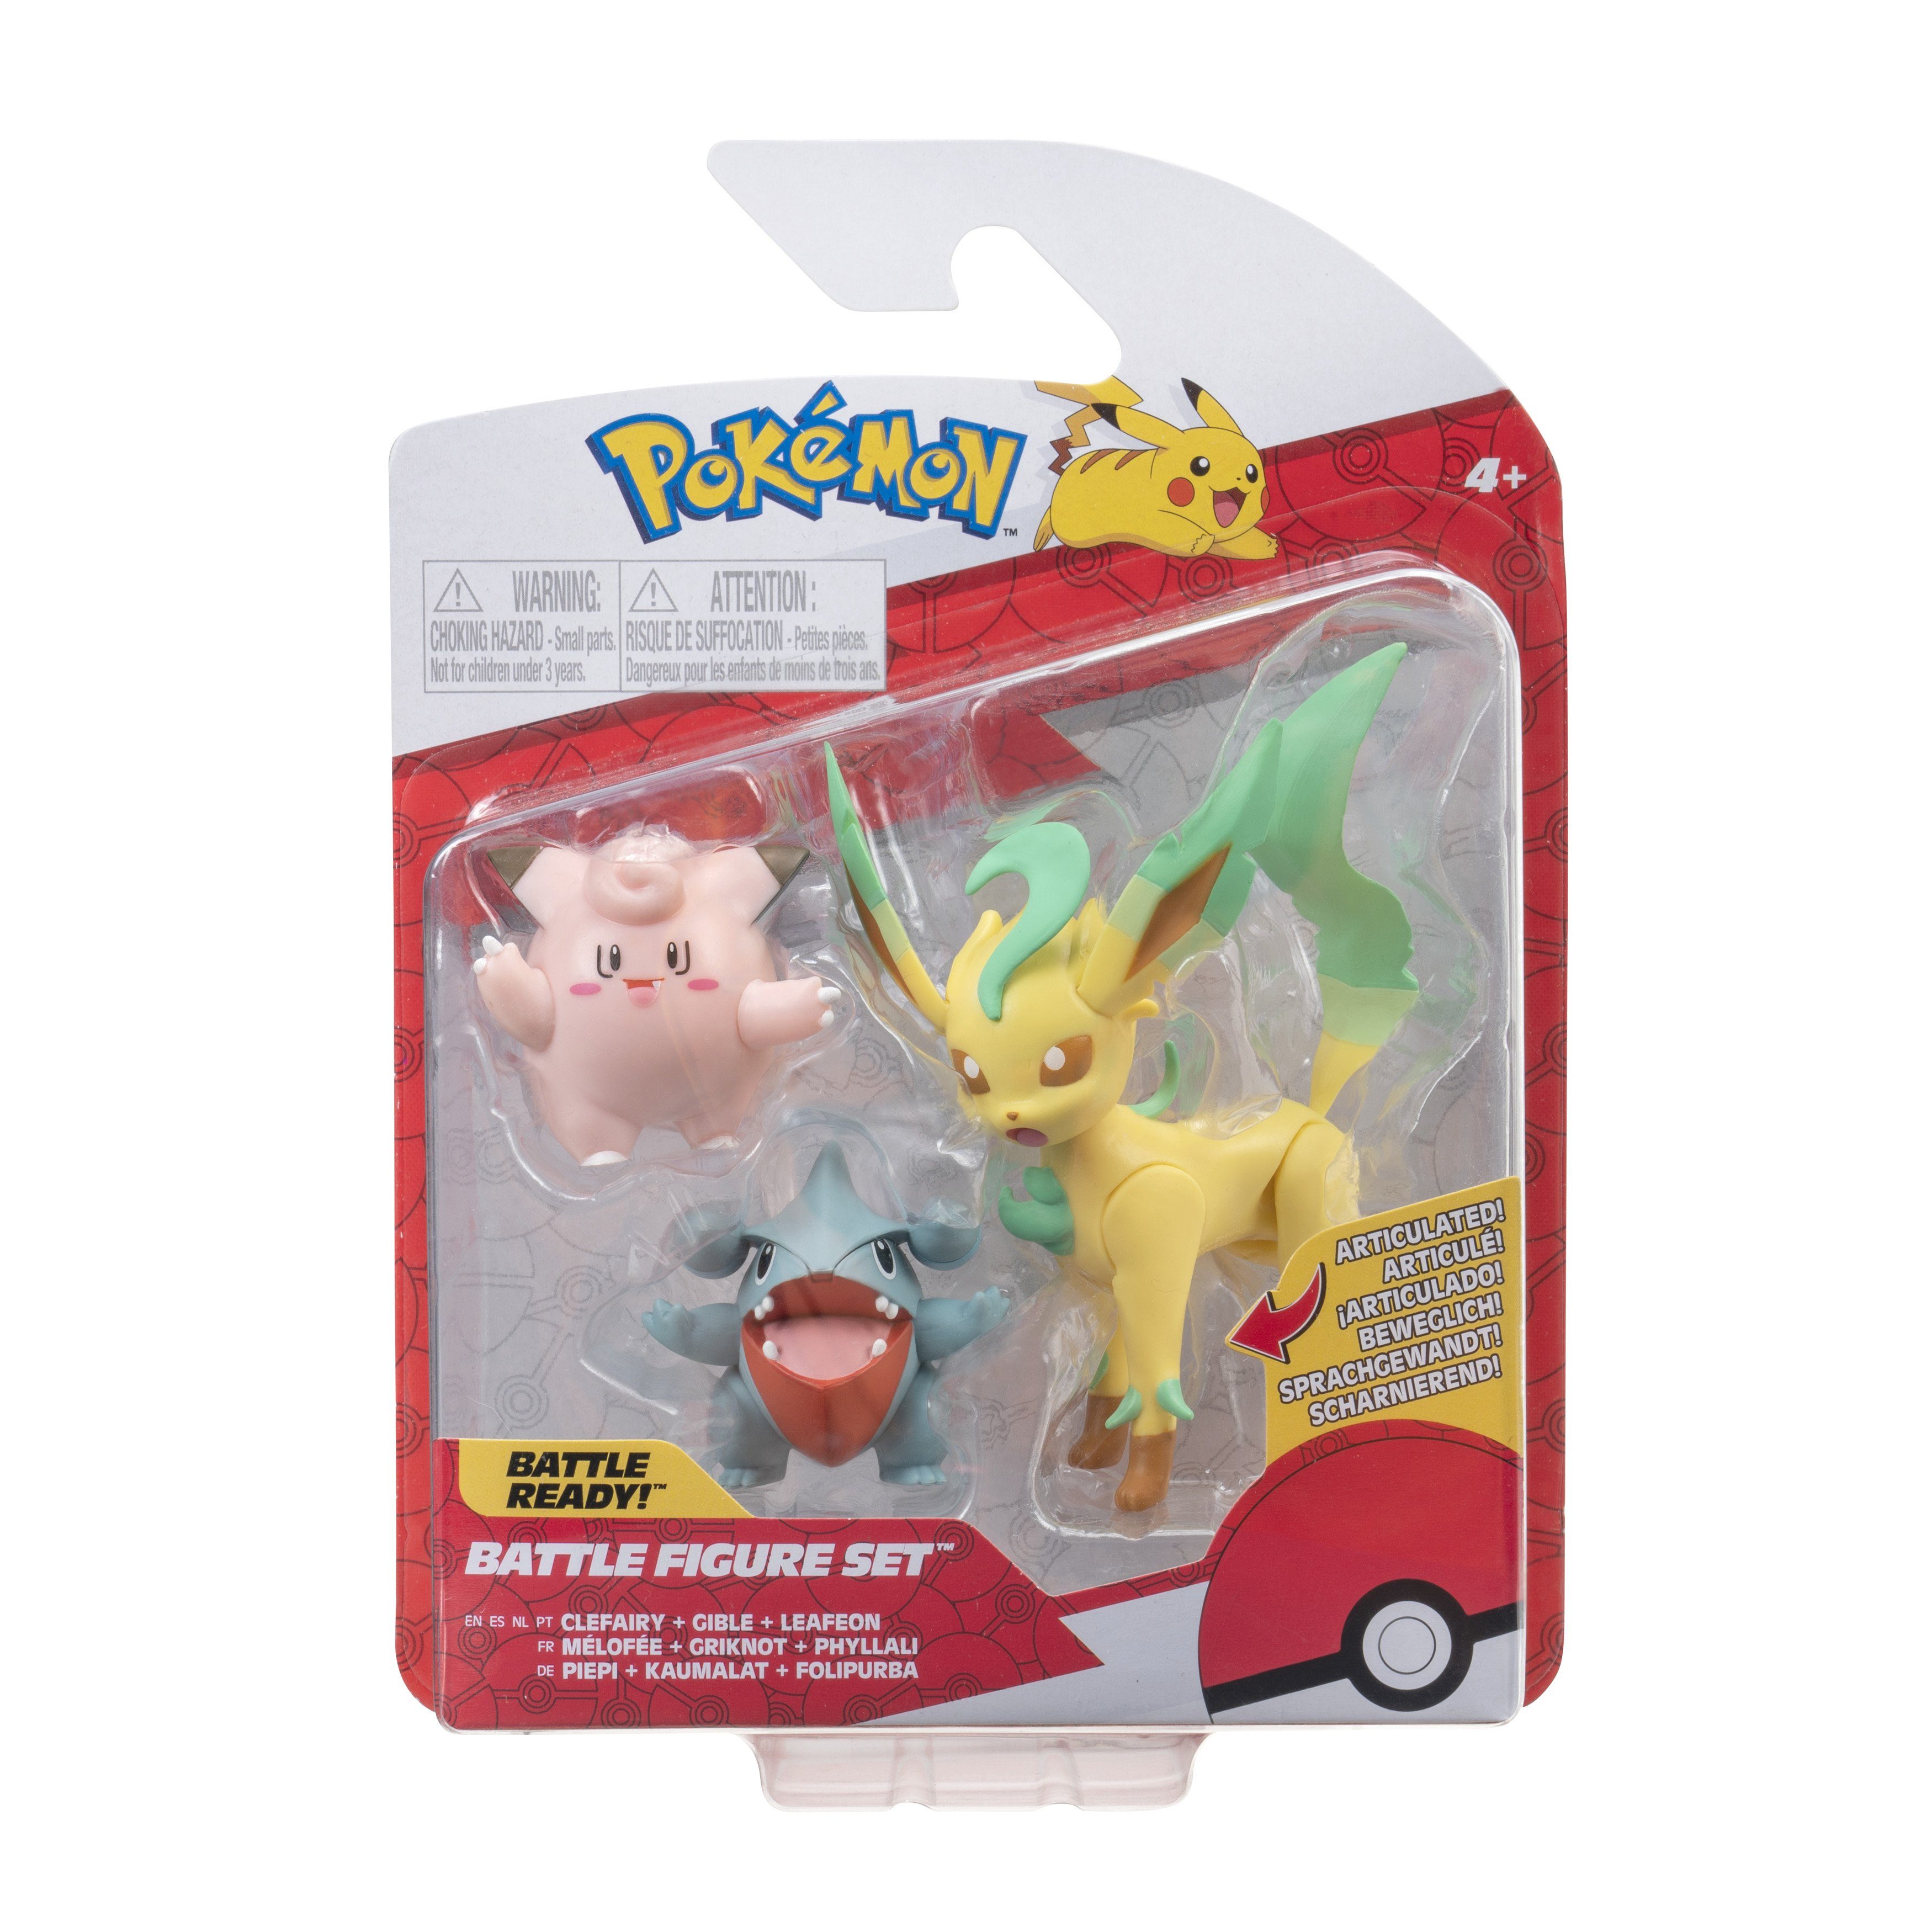 Jazwares Merchandise-Figur Pokémon - - 3er & Kaumalat 3-tlg) Figur Battle Piepi, Pack (Set, Folipurba